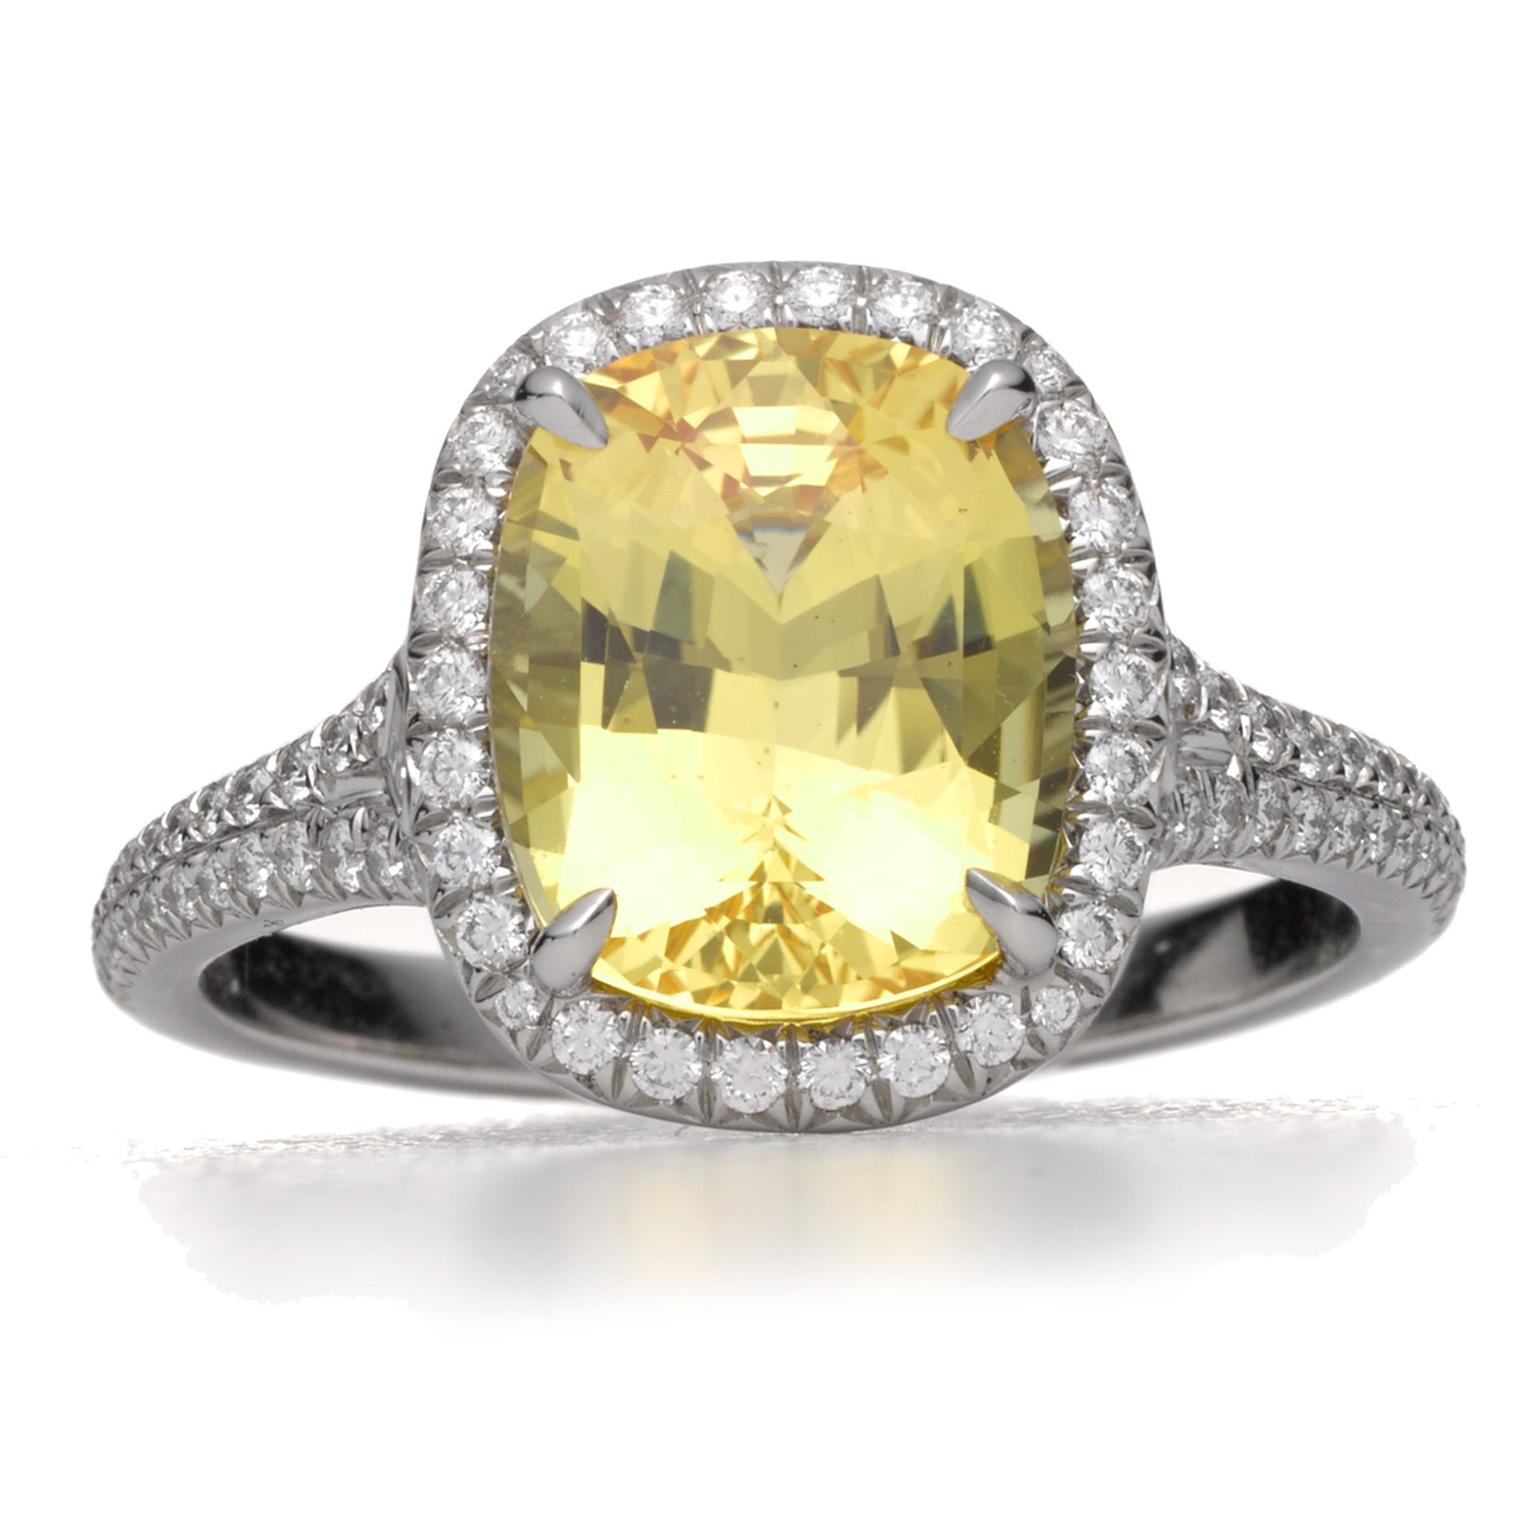 Tiffany yellow sapphire and diamond ring